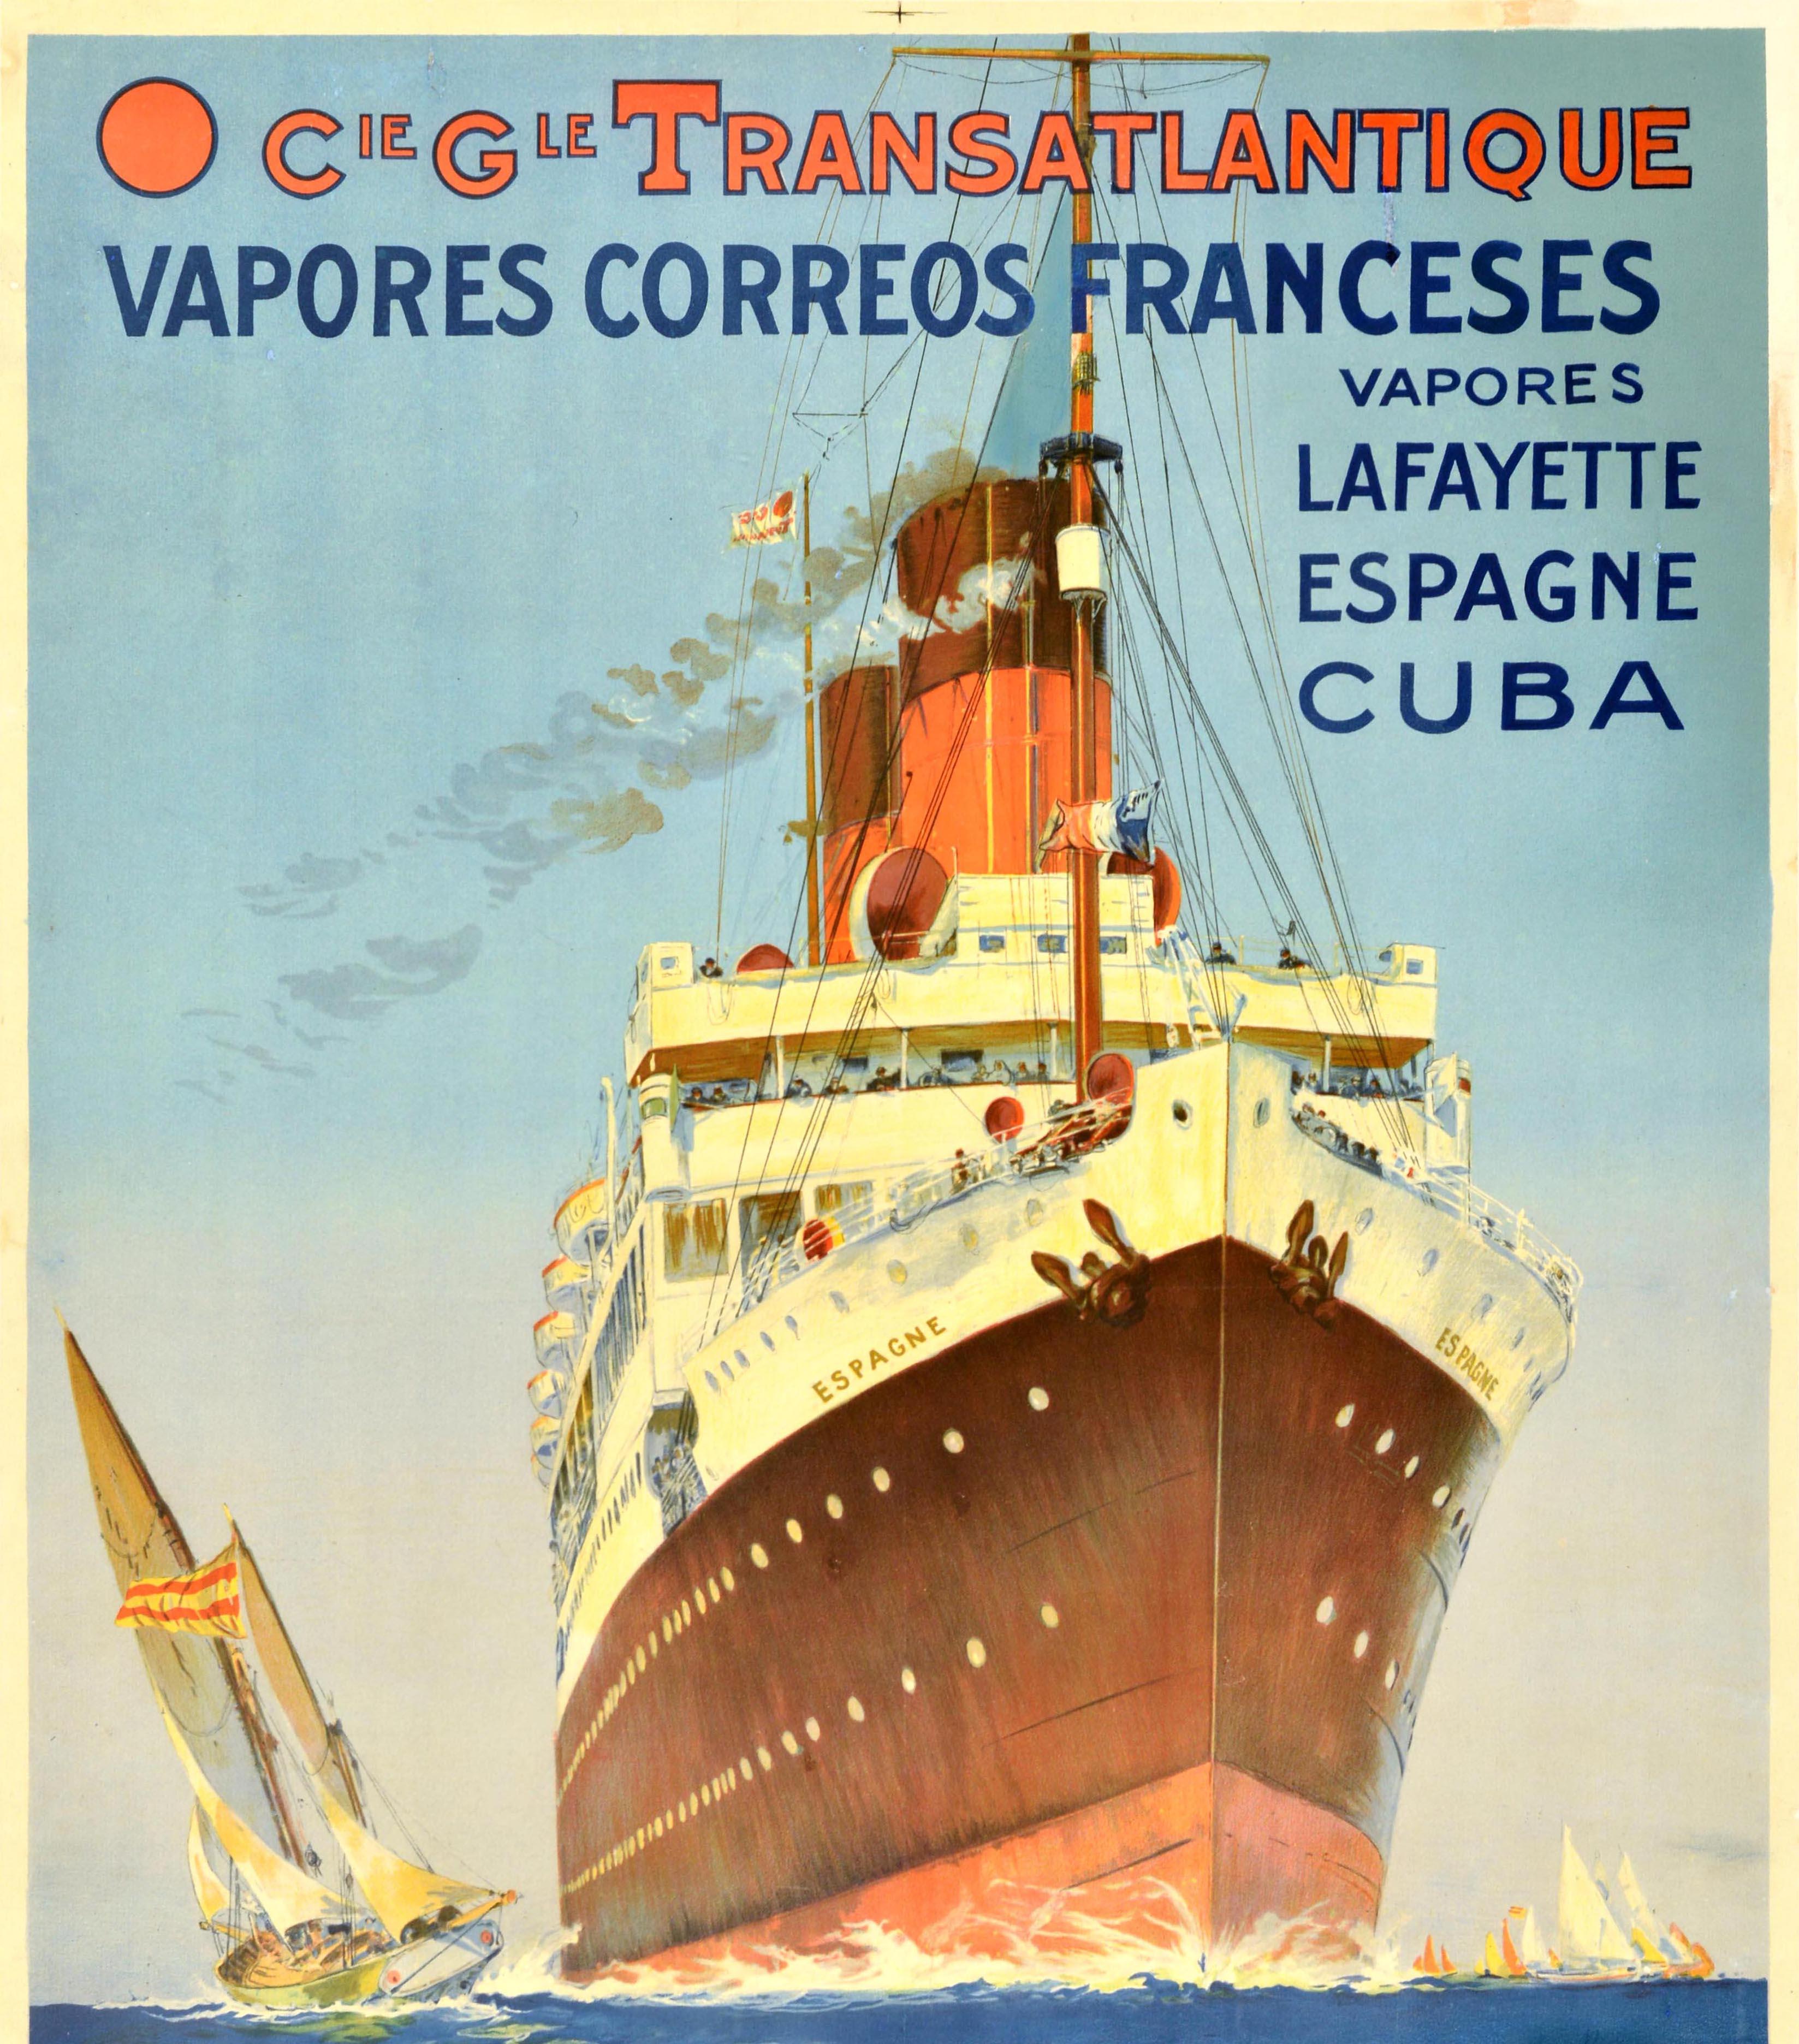 Original Vintage Steam Ship Cruise Travel Poster Cie Gle Transatlantique Espagne - Beige Print by Albert Sebille